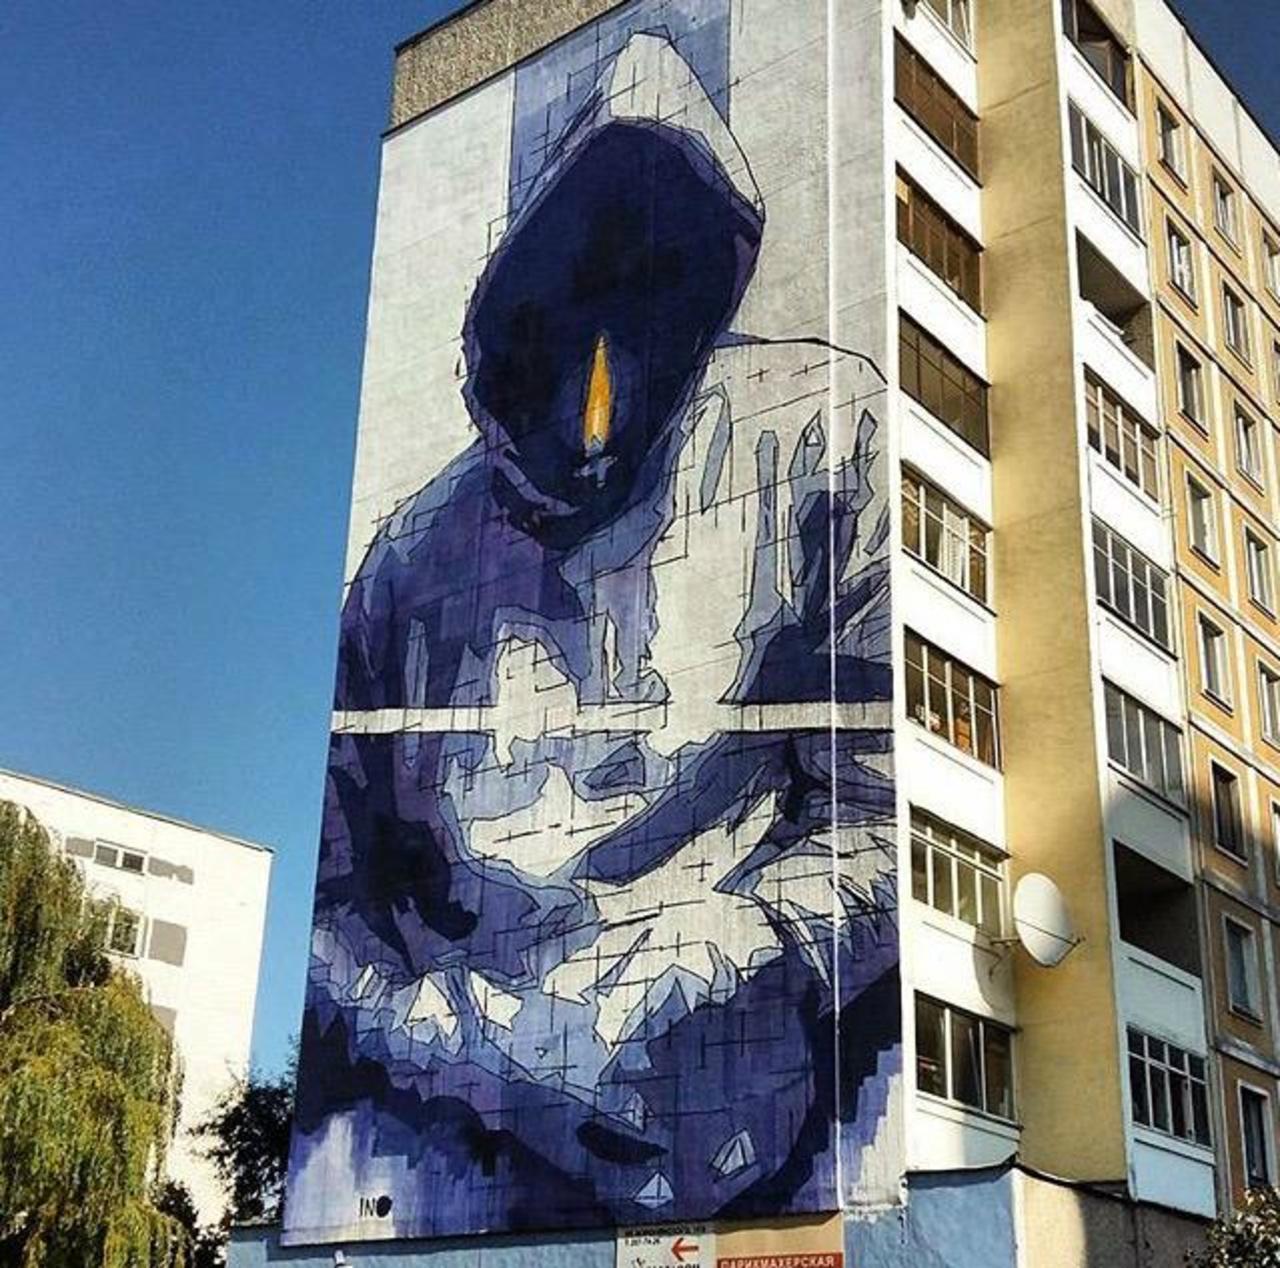 'Man With No Name' 
New Street Art by iNO in Minsk, Belarus 

#art #graffiti #mural #streetart http://t.co/4jrKc4clwg